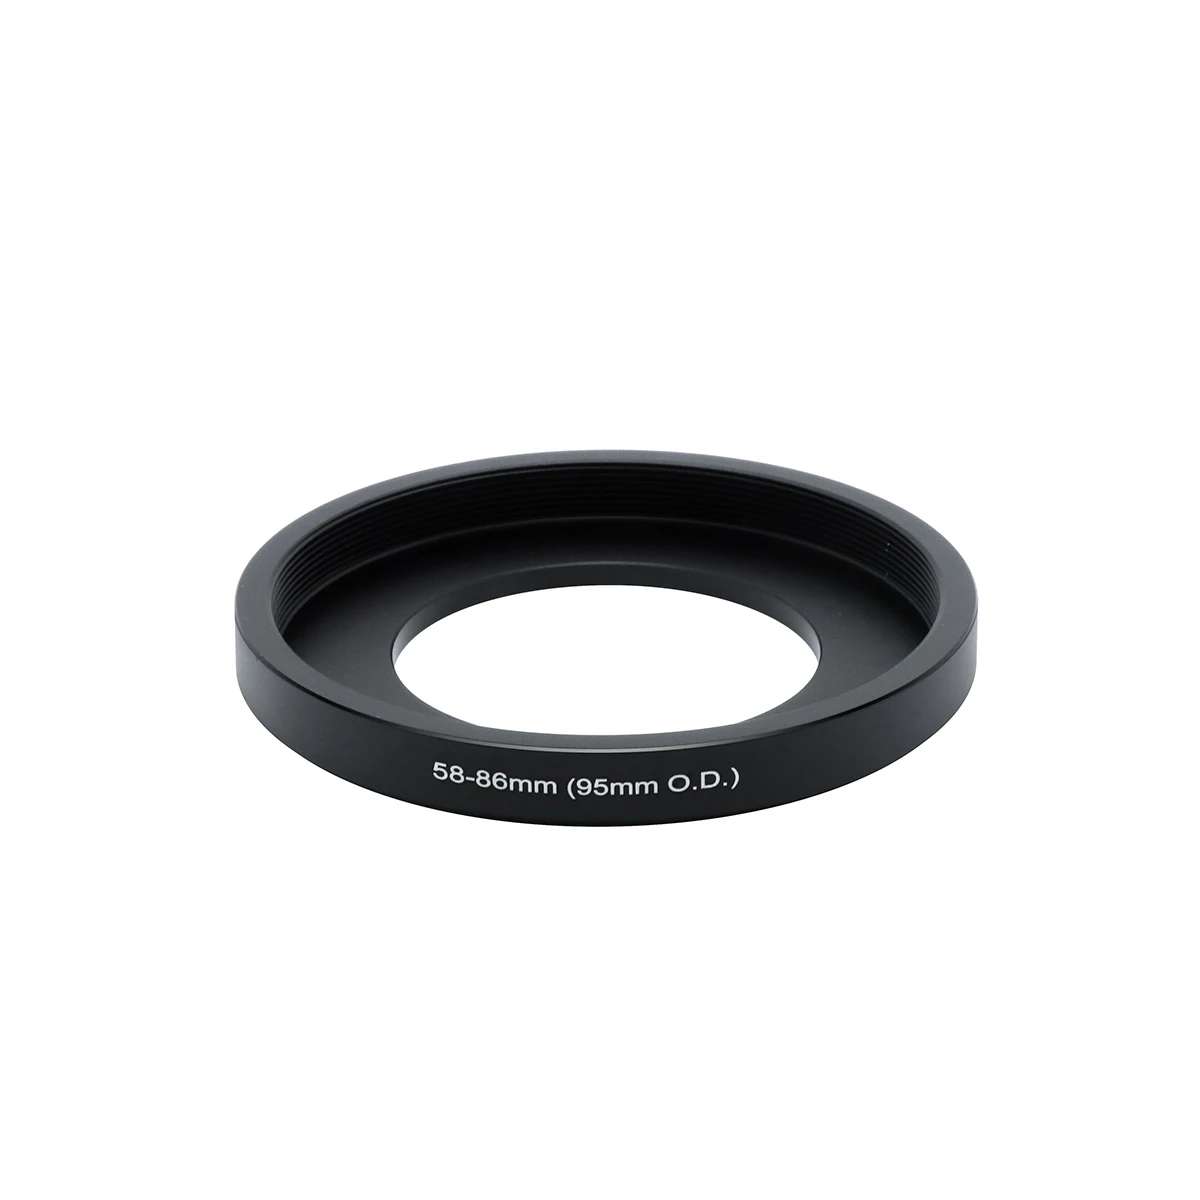 58-86mm (95mm O.D.) Matte Box Filter Adapter Step Up Front Ring enlarge